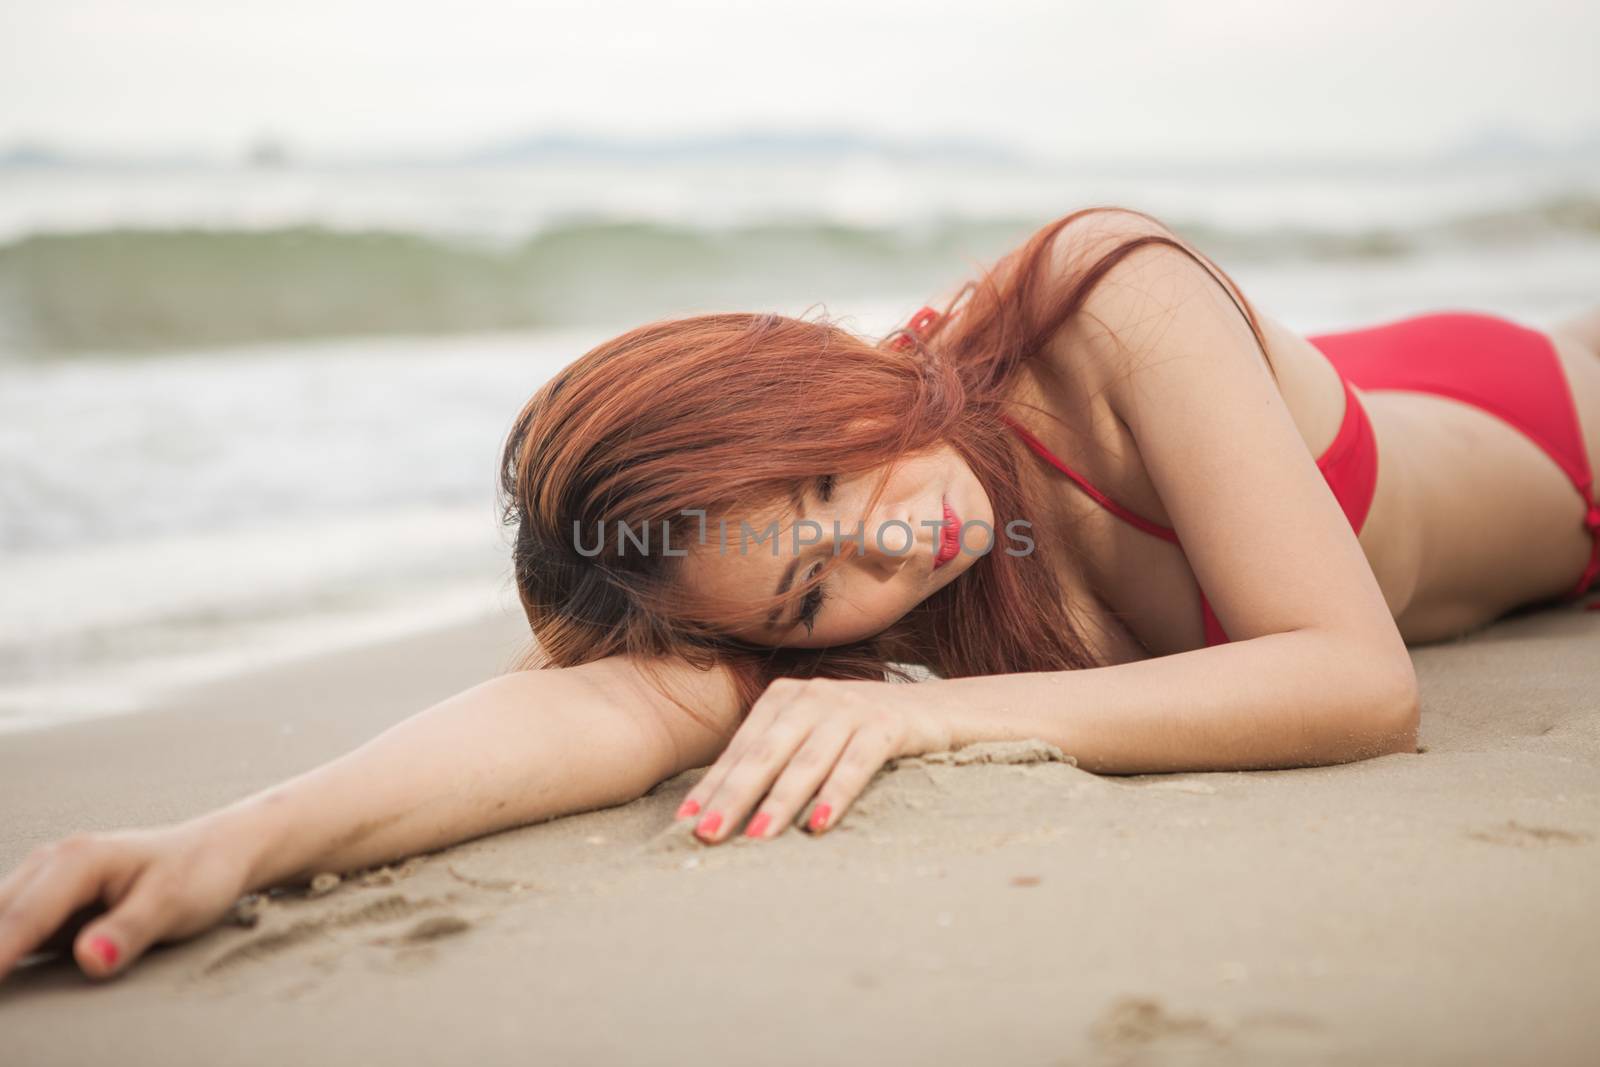 Beautiful asian woman in red bikini posing at beach